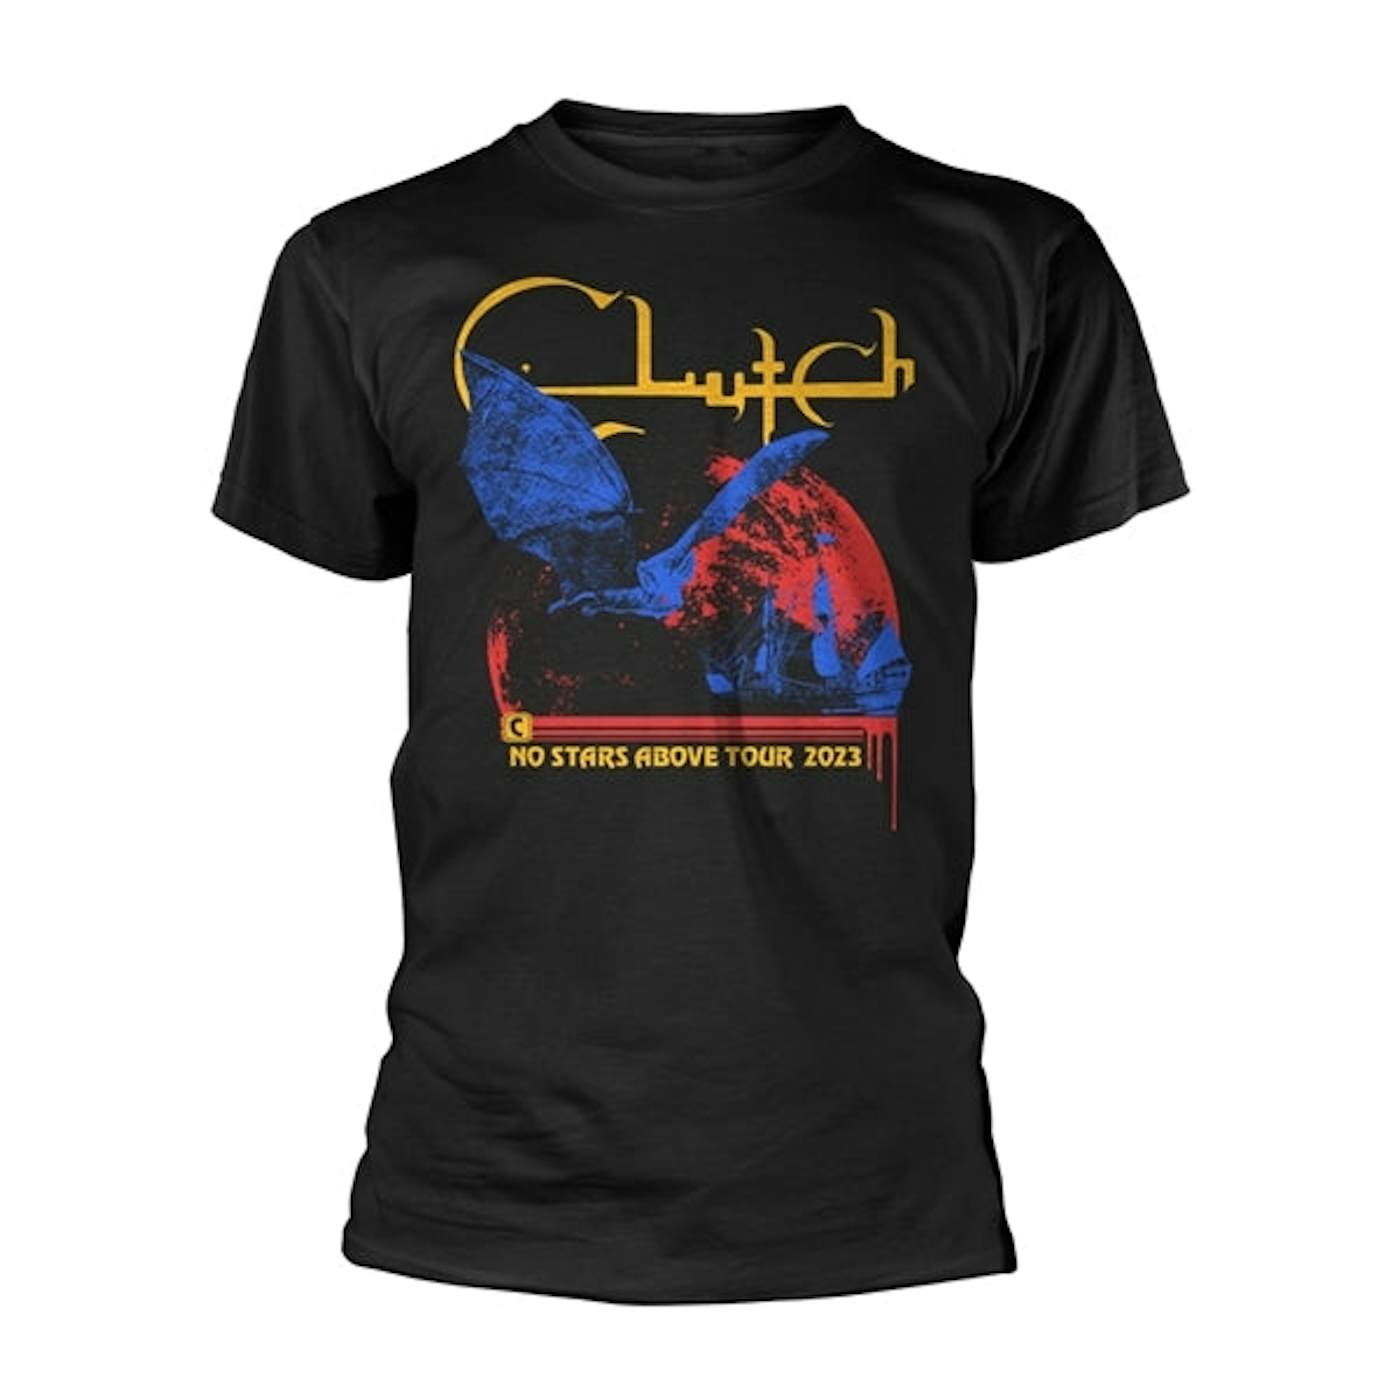 Clutch T Shirt - No Stars Above Tour 2023